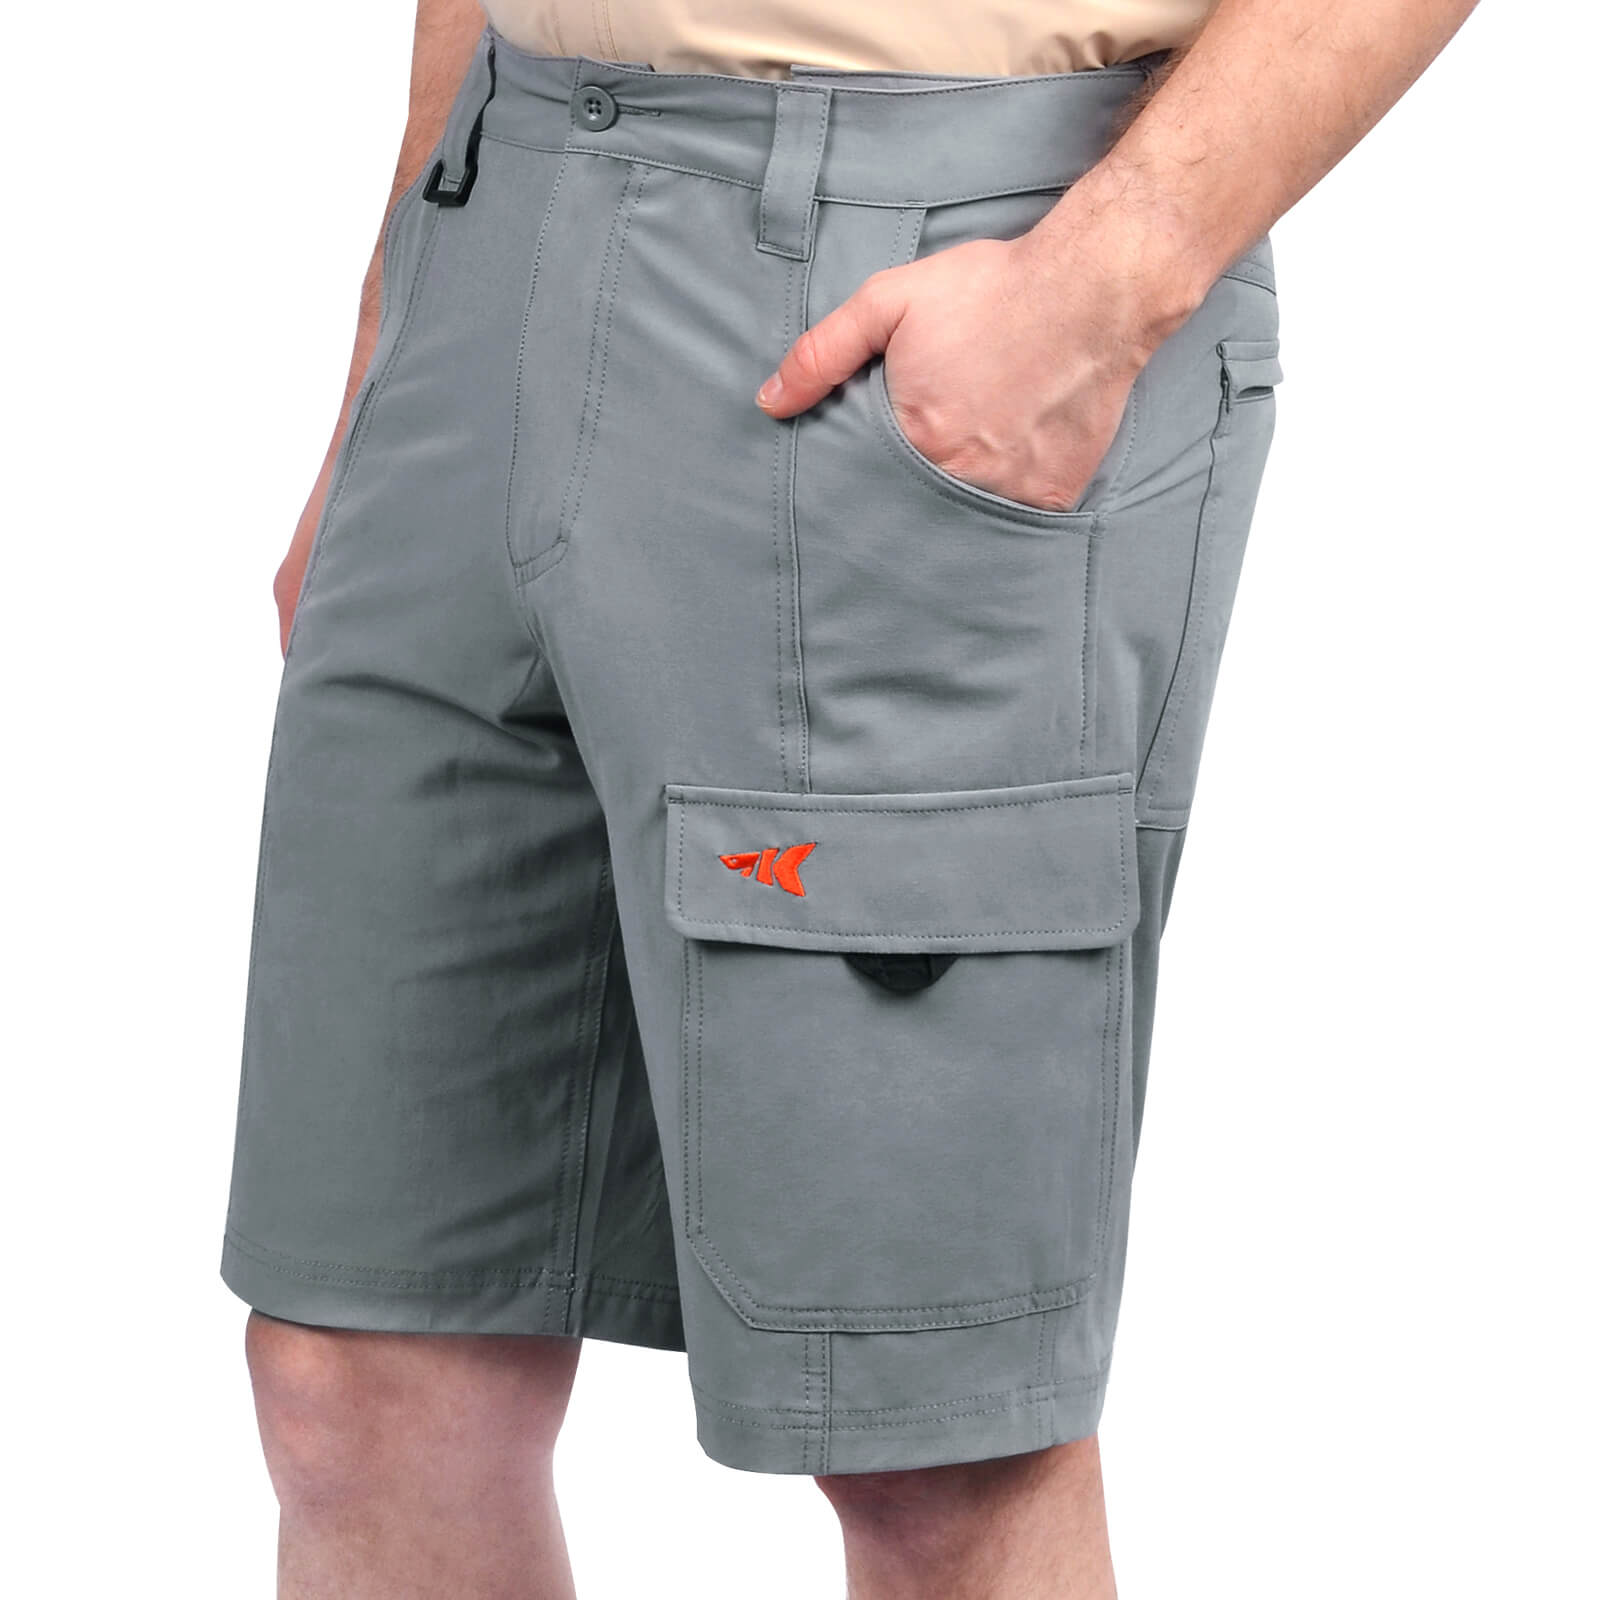 Men's Shorts Below The Knee Lightweight Walking Seven Point Belt Pocket  Cargo Exercise Fishing Cargo Shorts for Men Multi-color